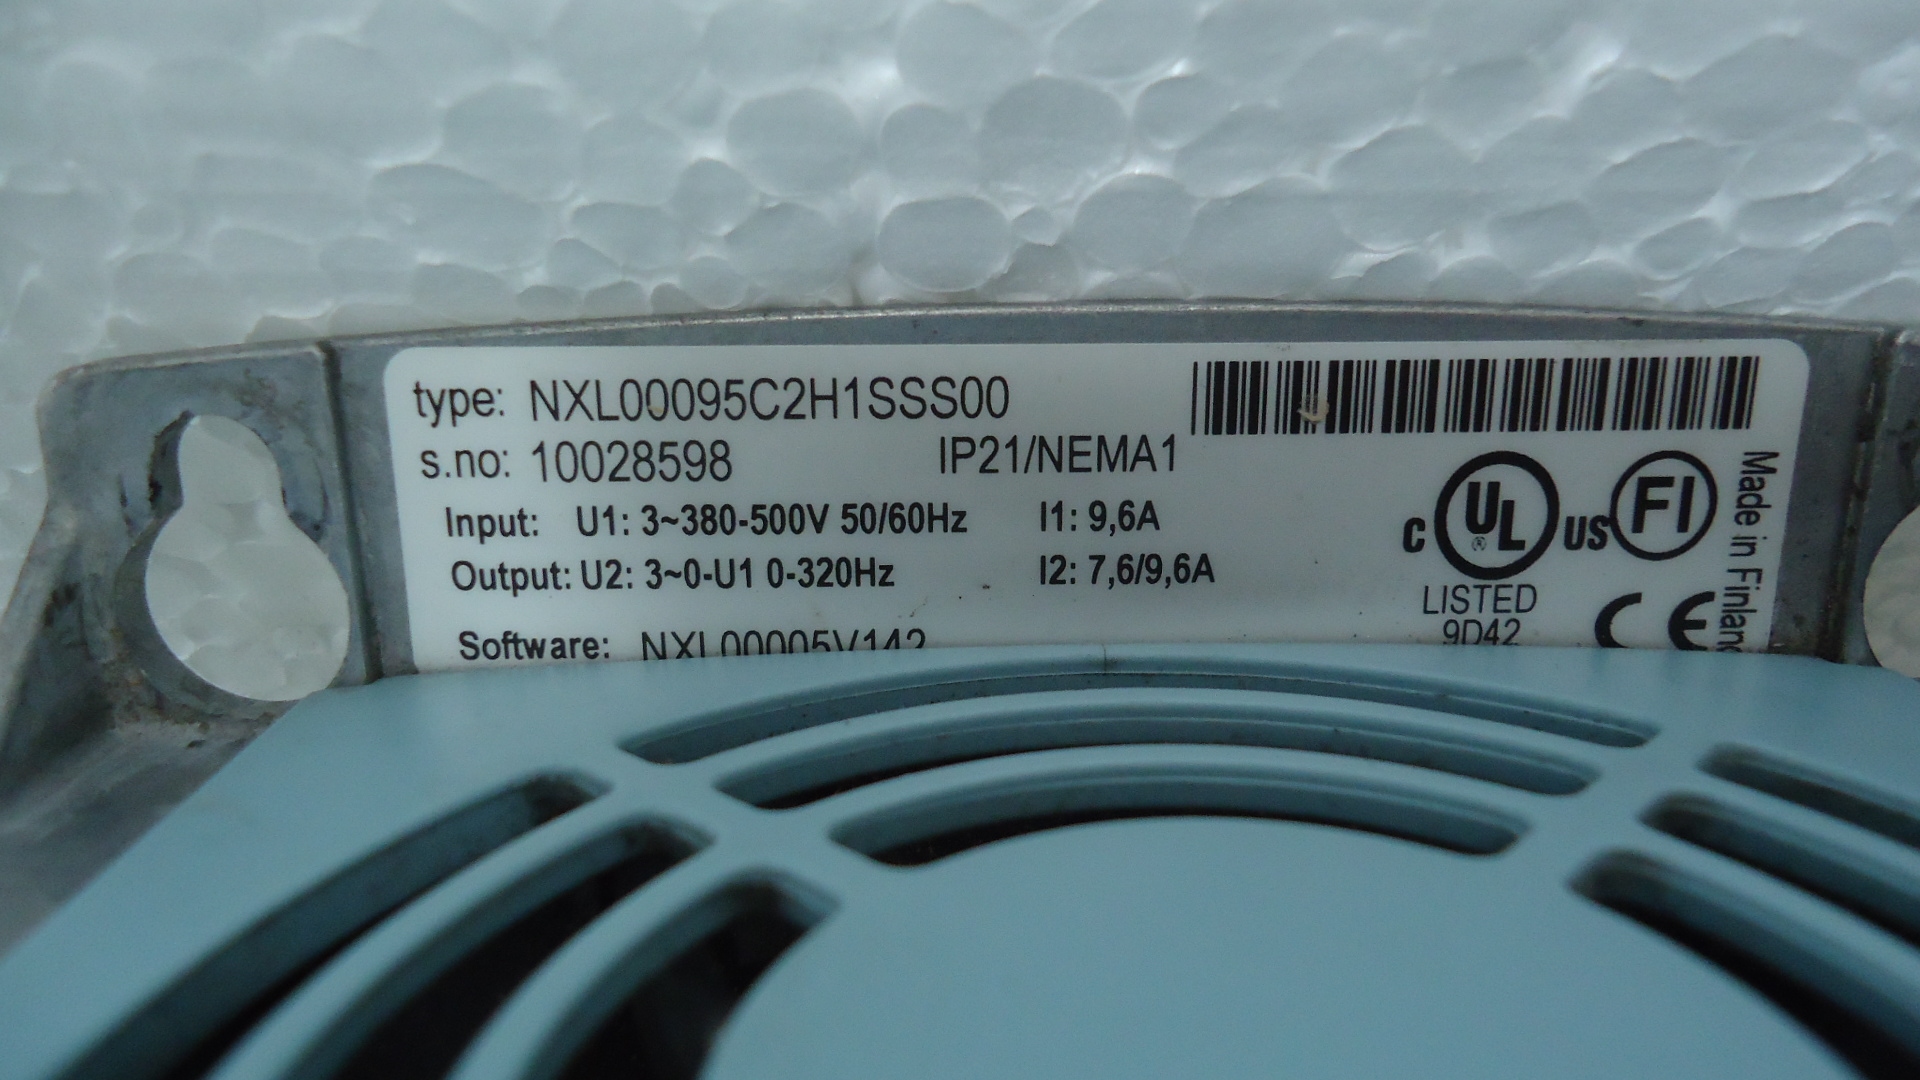 NXL0095C2H1SSS00 IP21/NEMA1 Vacon drive